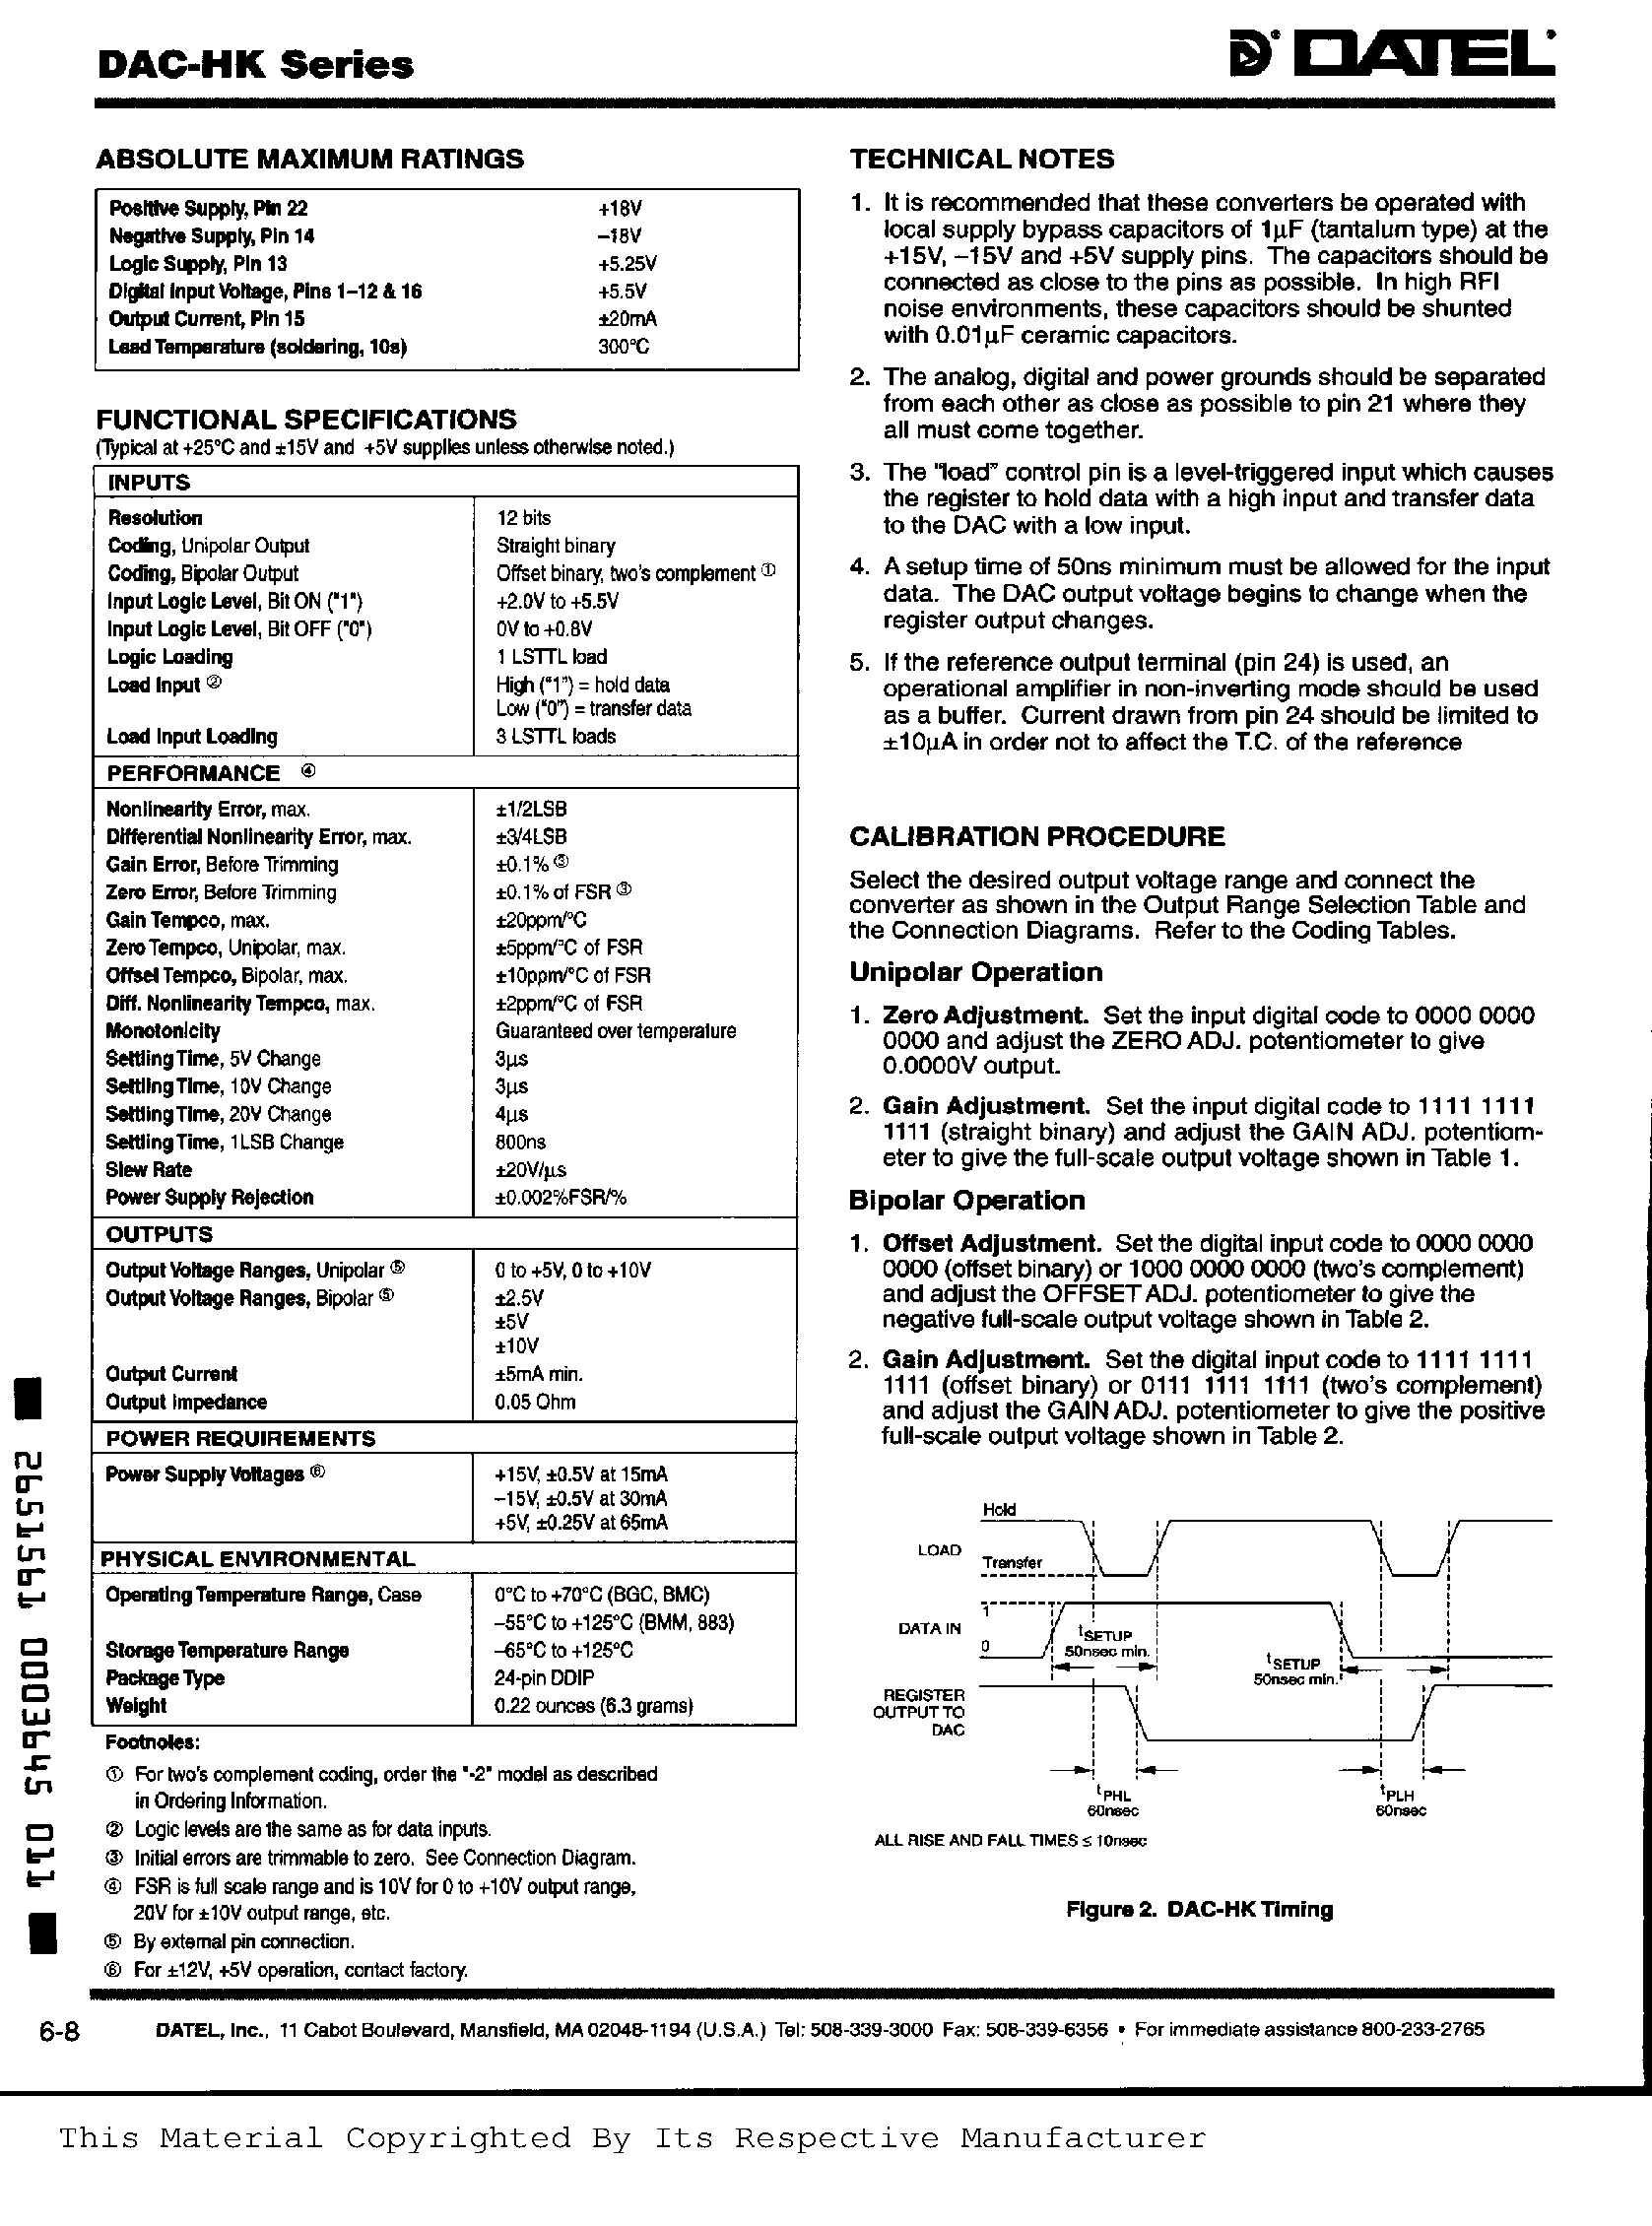 Datasheet DAC-HK12BGC - HIGH PERFORMANCE 12 BIT DAC WITH INPUT REGISTERS page 2